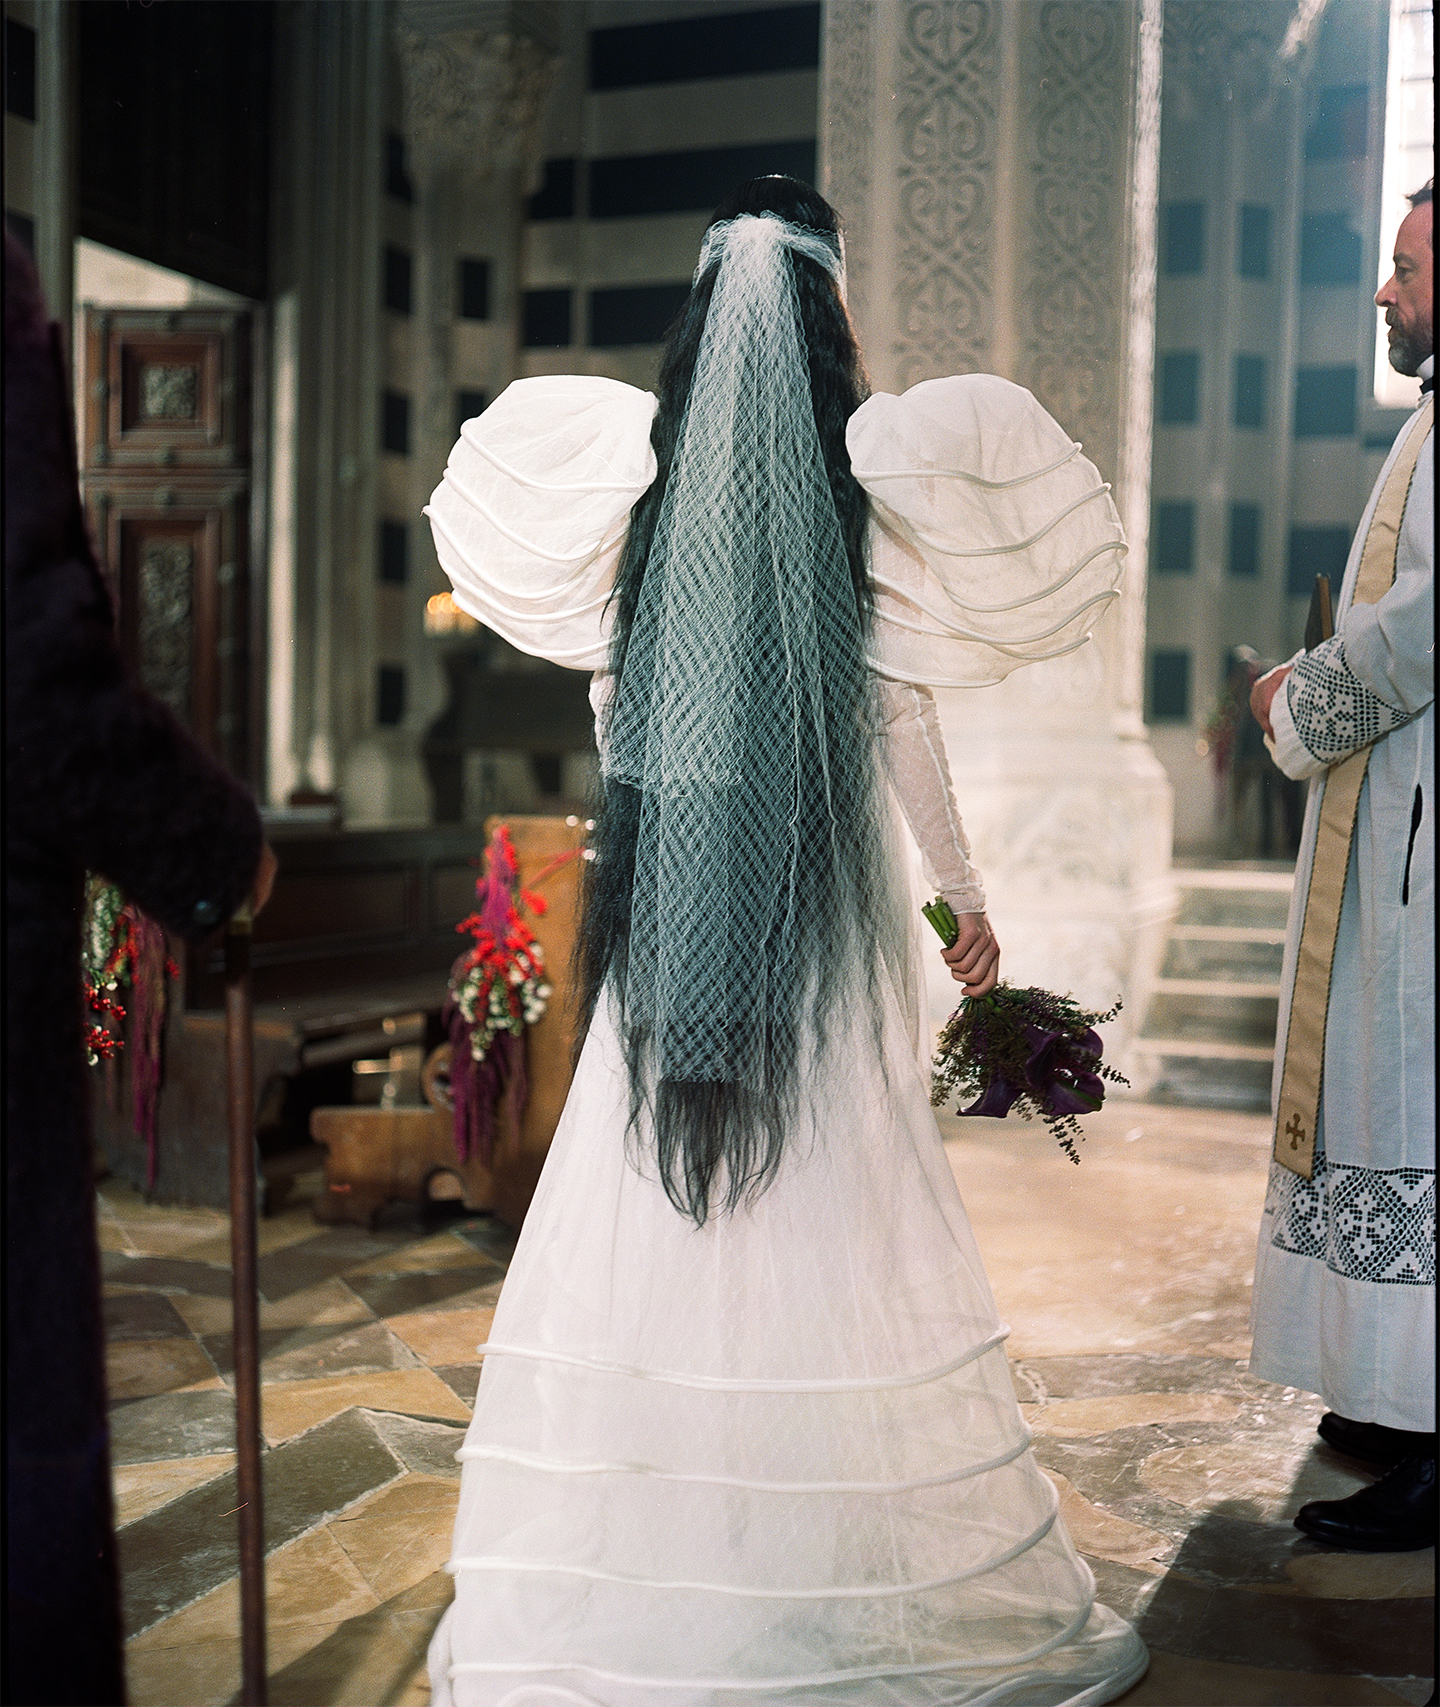 Bella Baxter's wedding dress. Courtesy of Searchlight